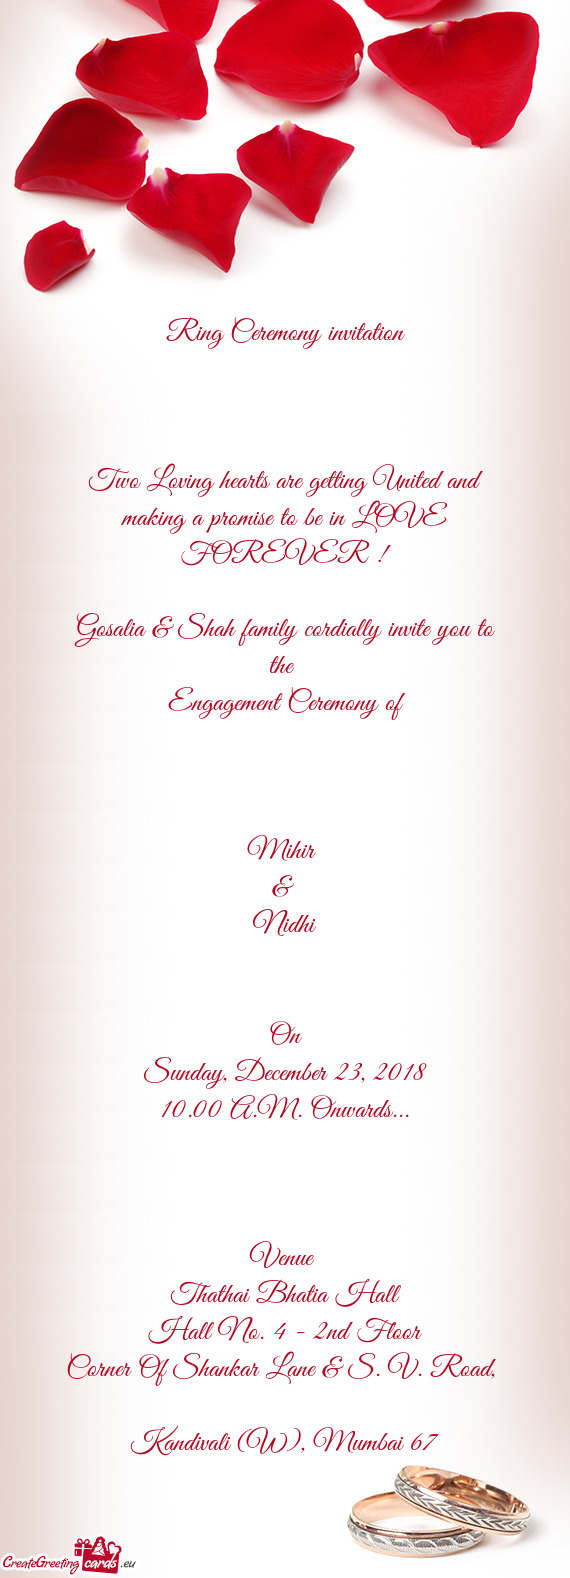 Gosalia & Shah family cordially invite you to the